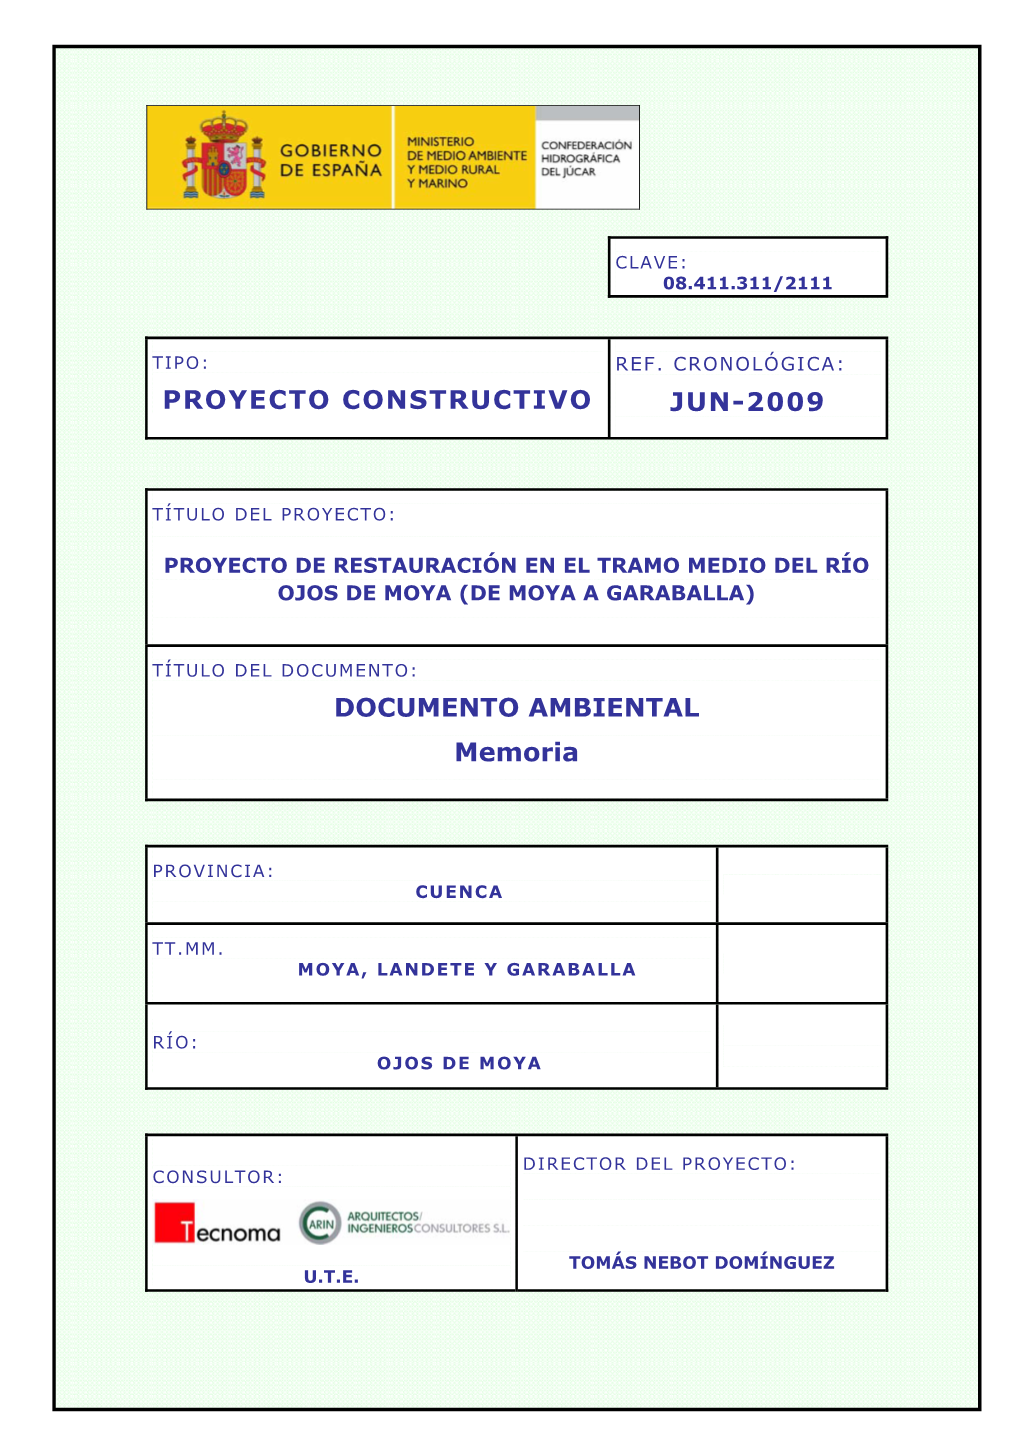 Proyecto Constructivo Jun-2009